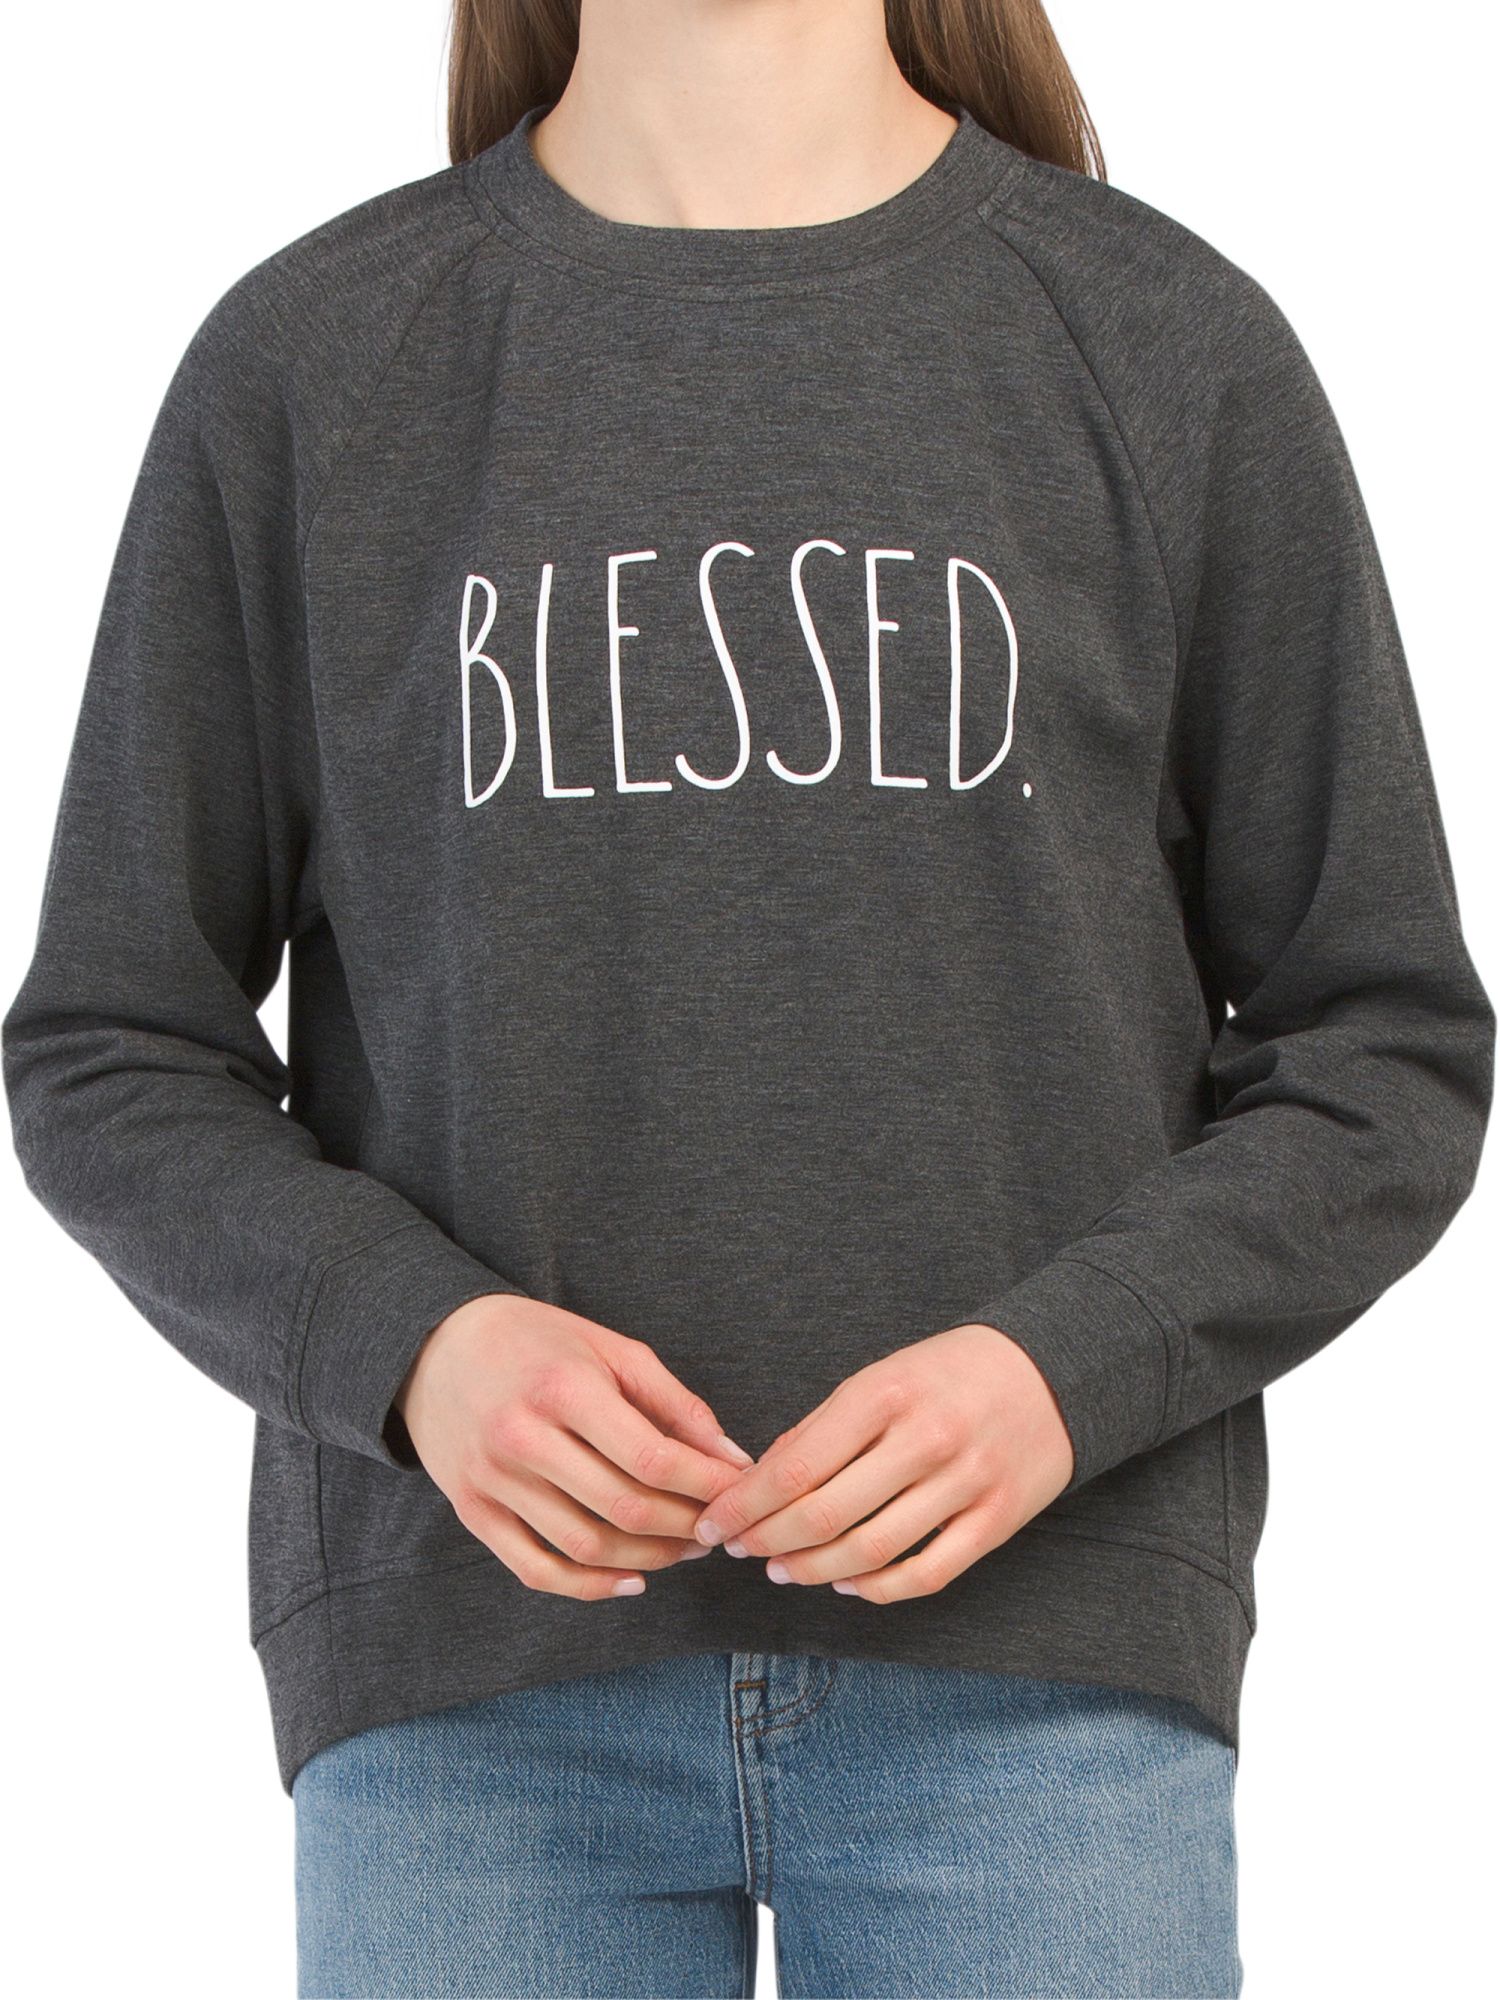 Blessed Sweatshirt | TJ Maxx